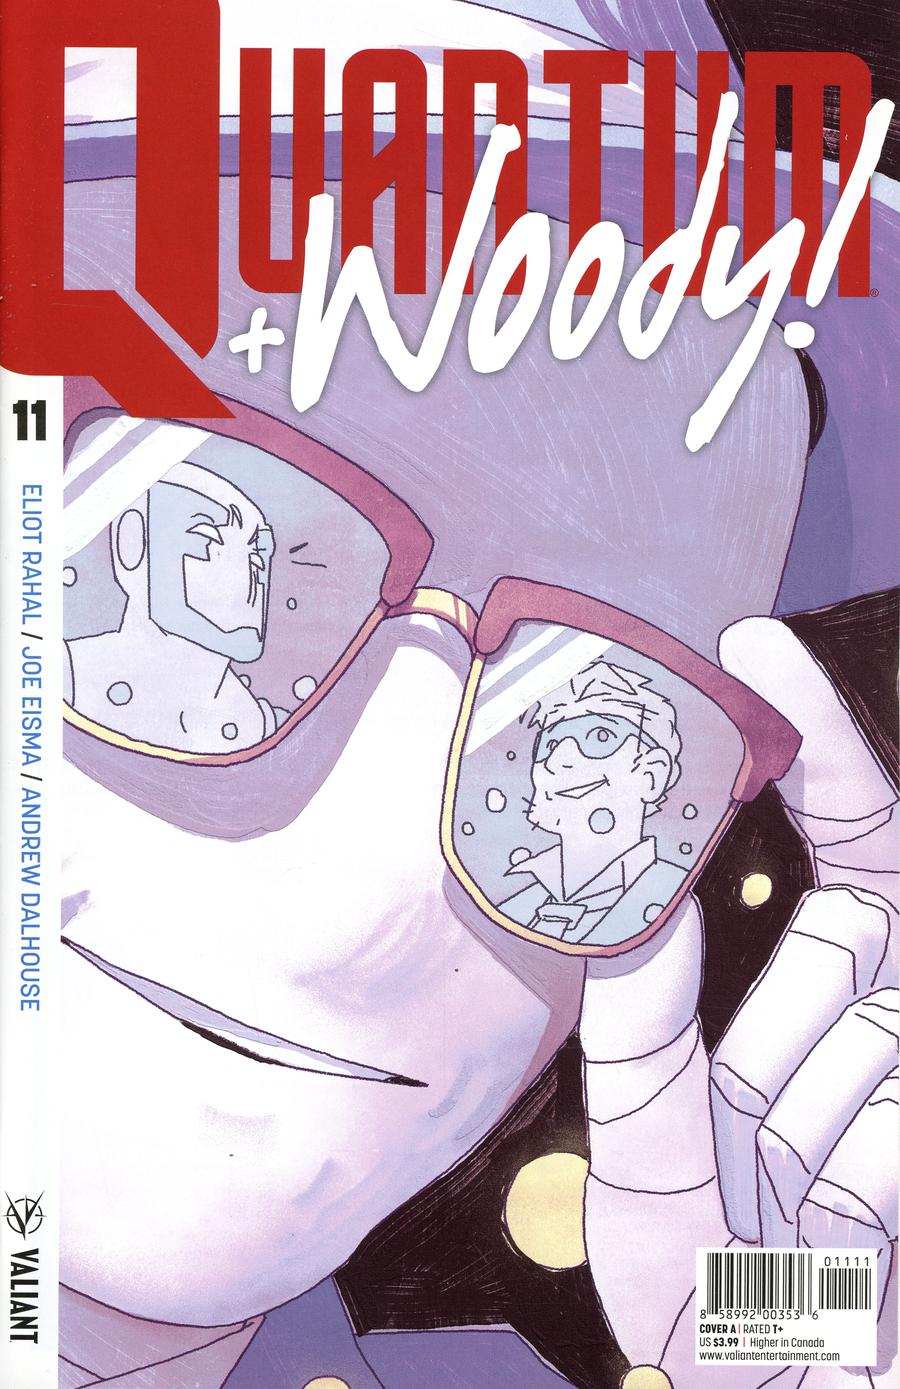 Quantum & Woody Vol 4 #11 Cover A Regular Kyle Smart Cover